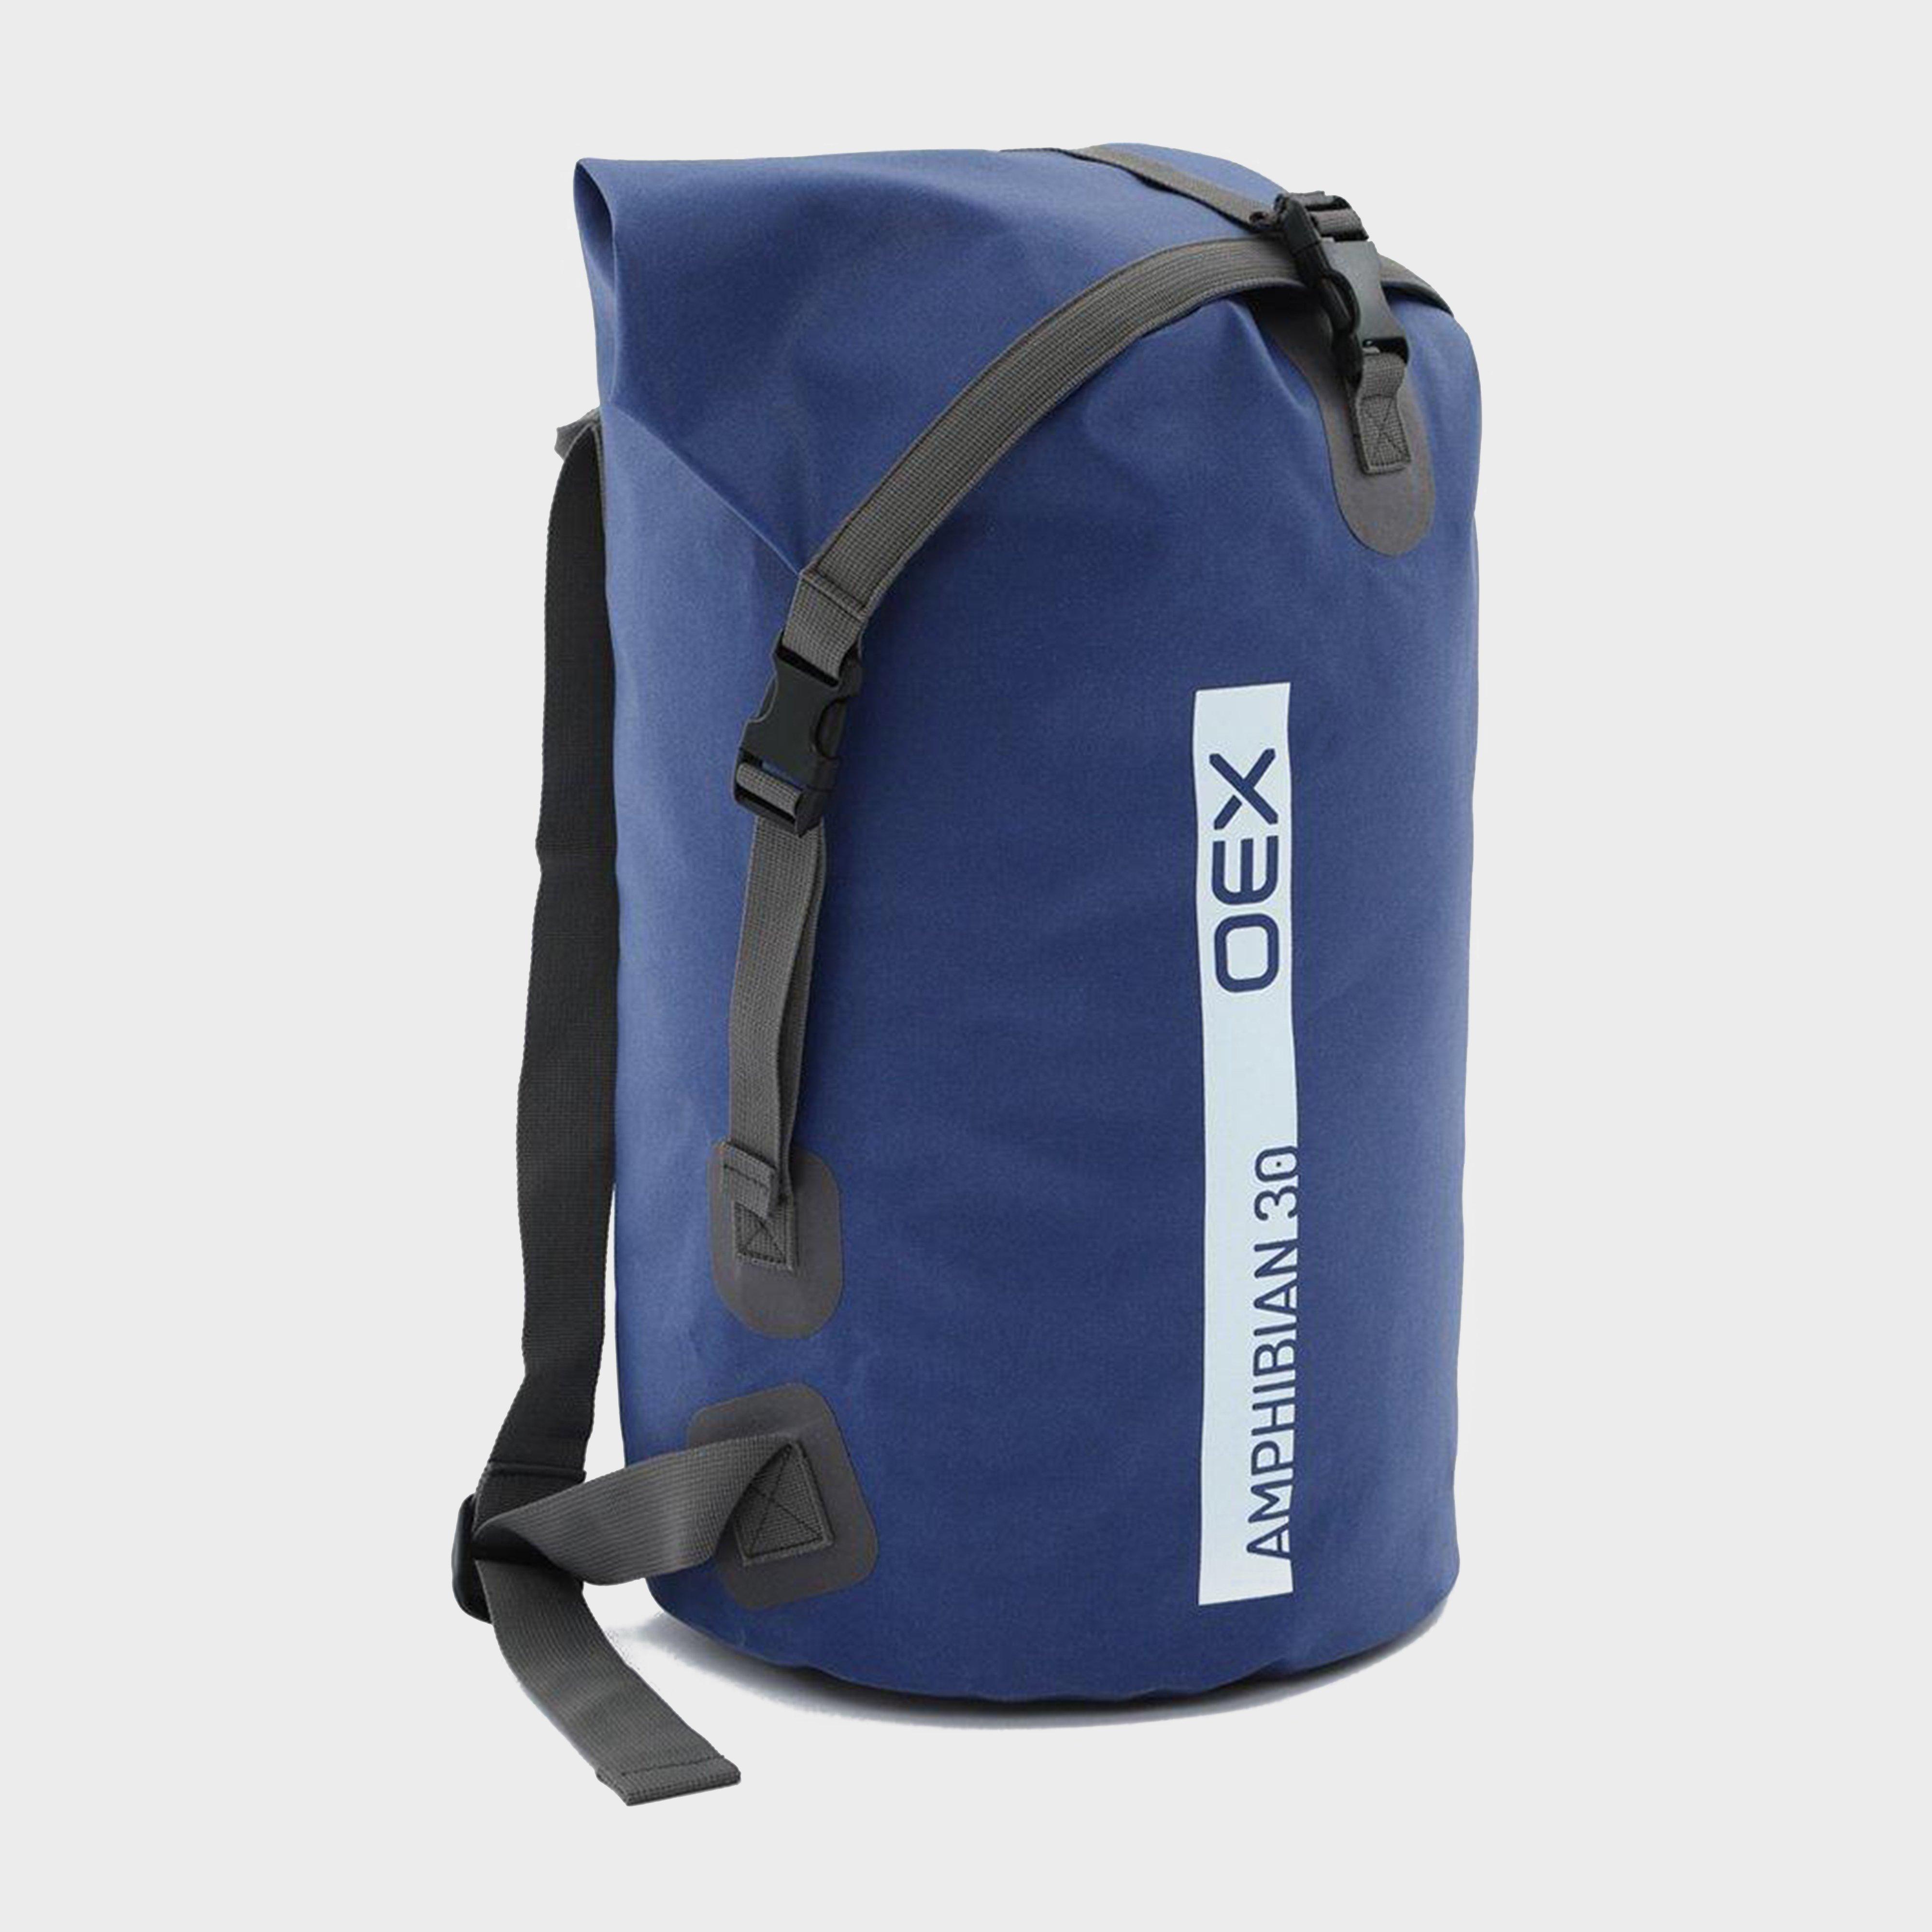 Oex Amphibian Waterproof Bag 30l - Blue/waterproof  Blue/waterproof